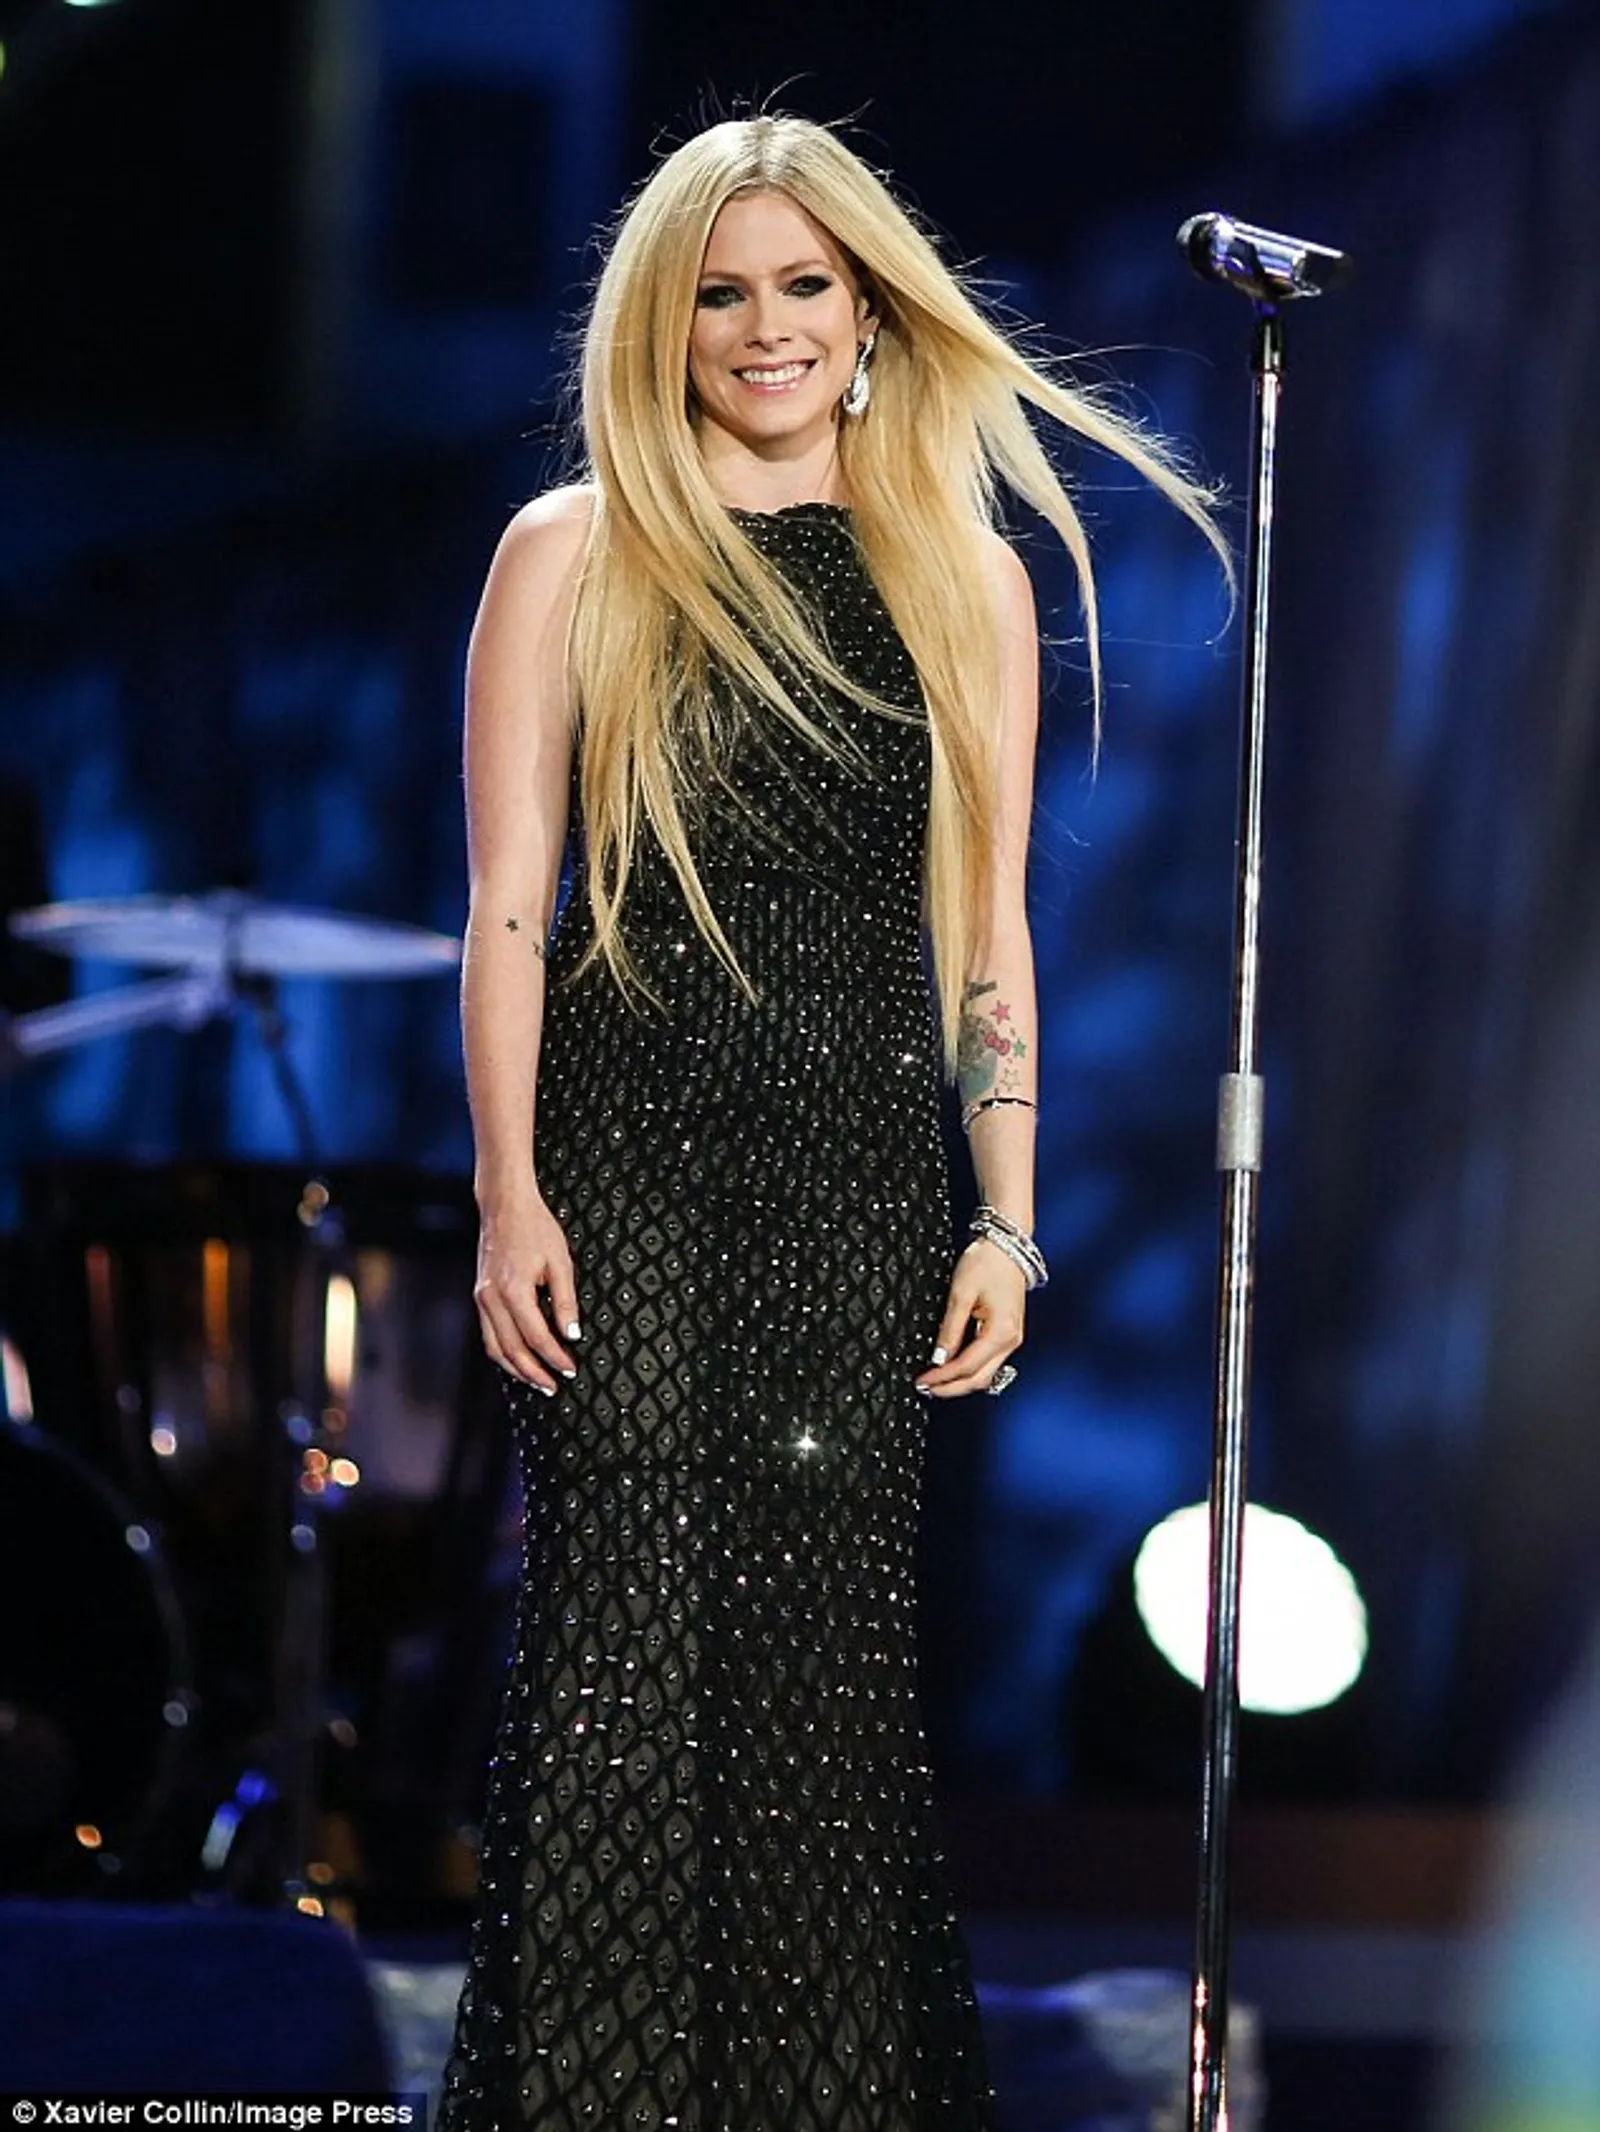 Gaya Ikonik Avril Lavigne di Atas Panggung dari Masa ke Masa